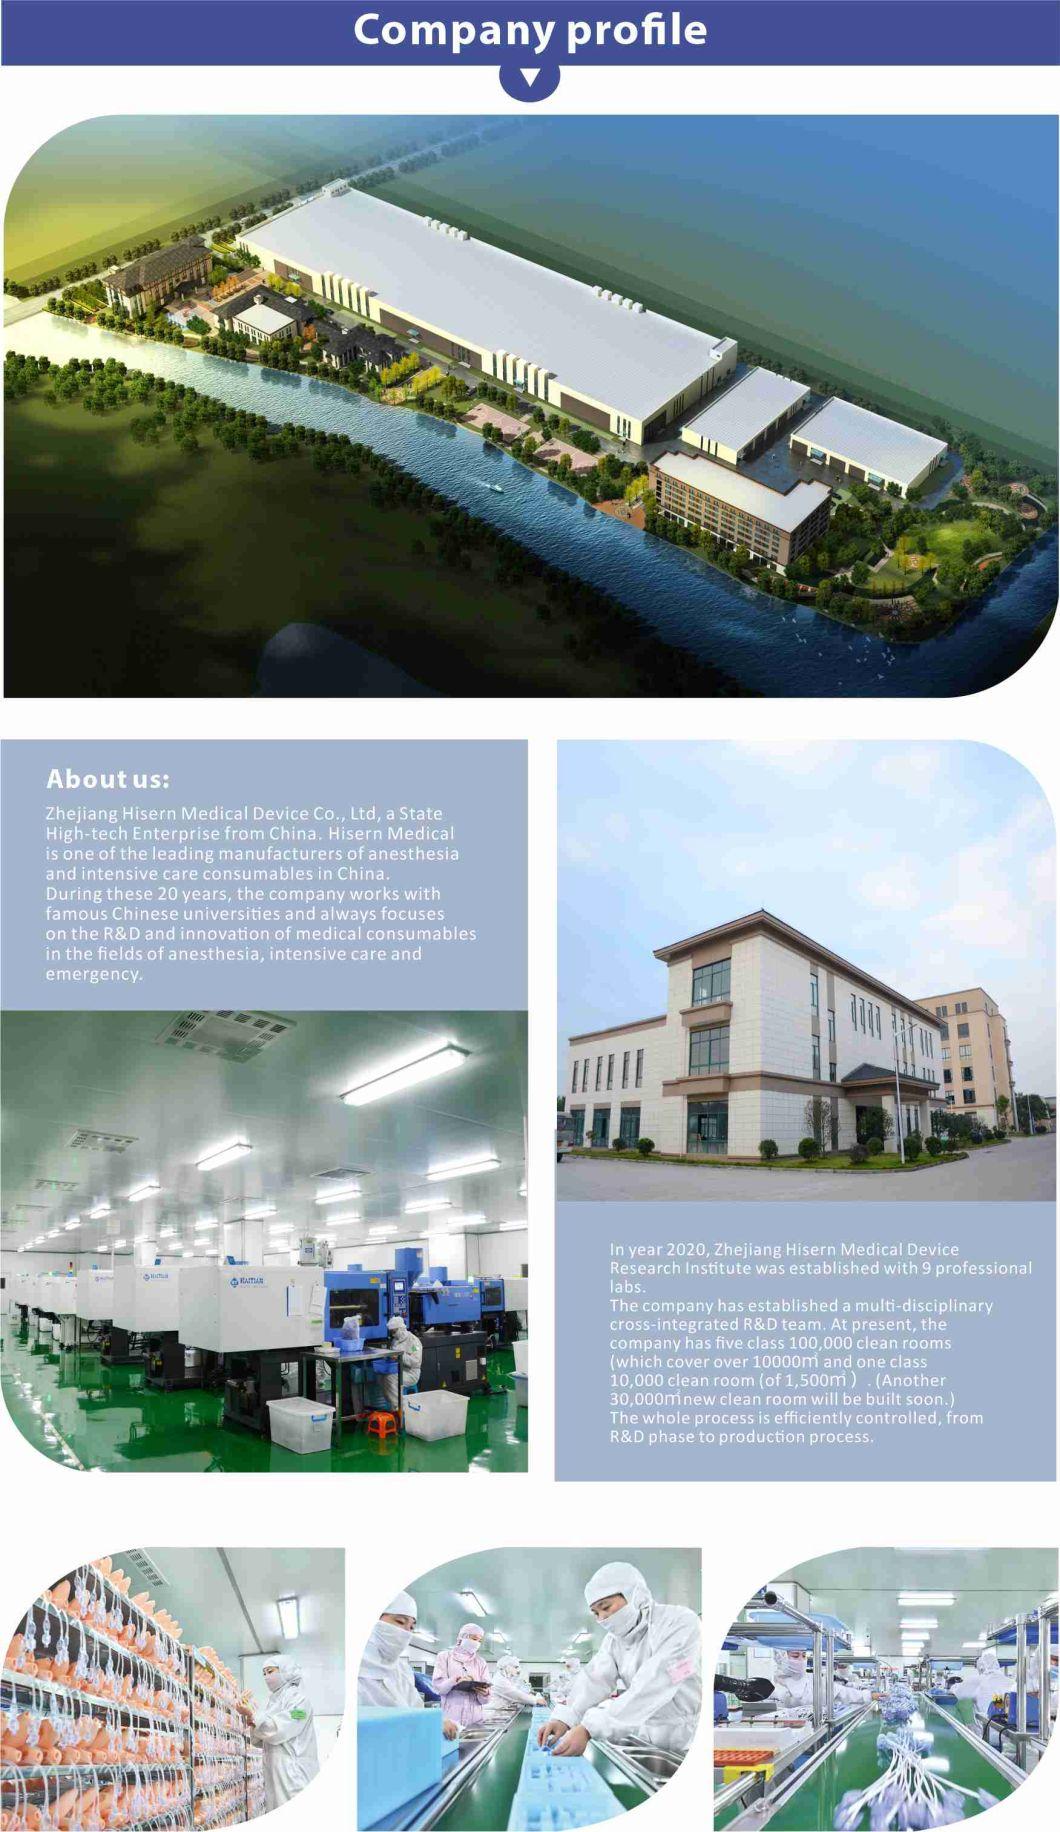 China Factory Supply ISO, CE & FDA 510K IBP Transducer Triple Lumen